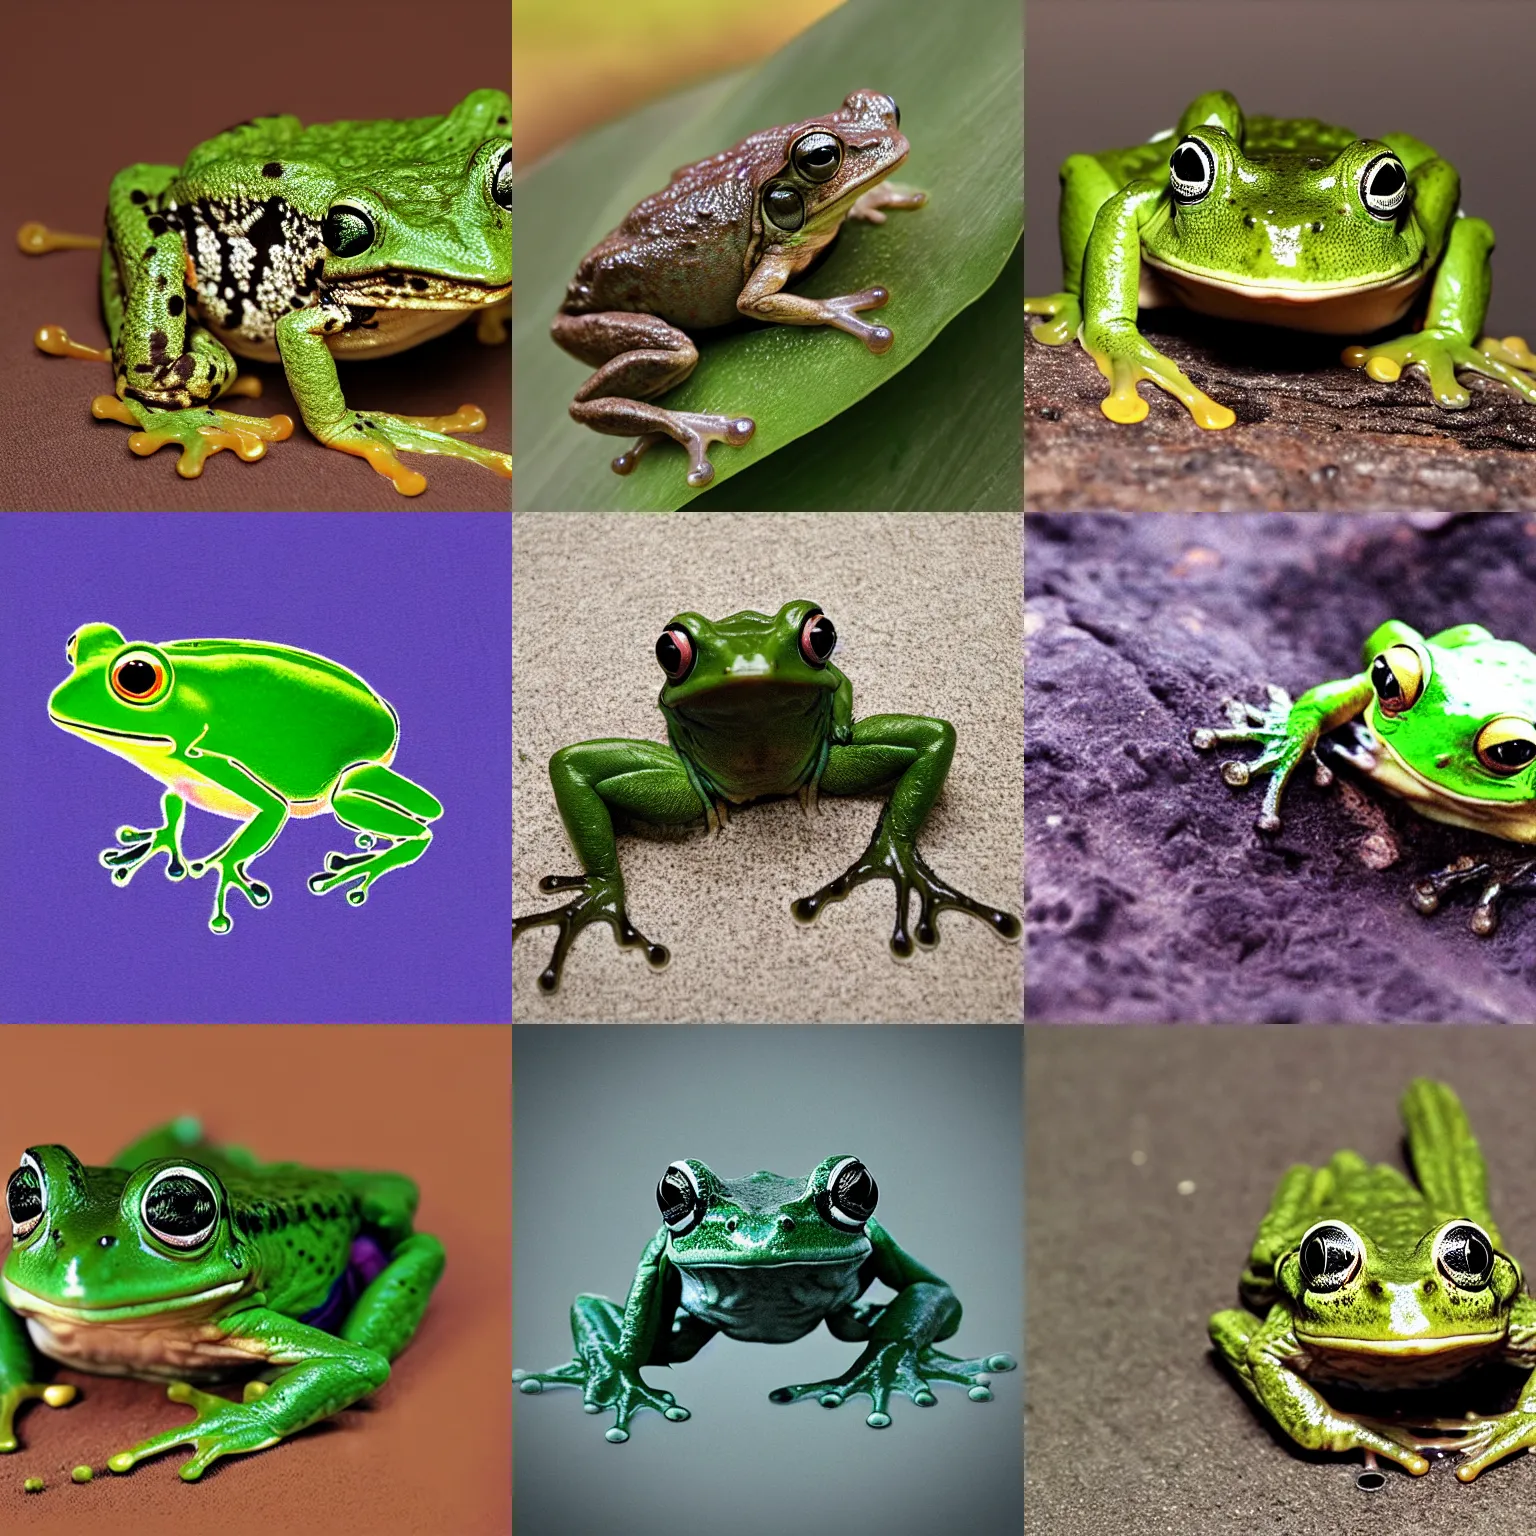 Prompt: an alien frog